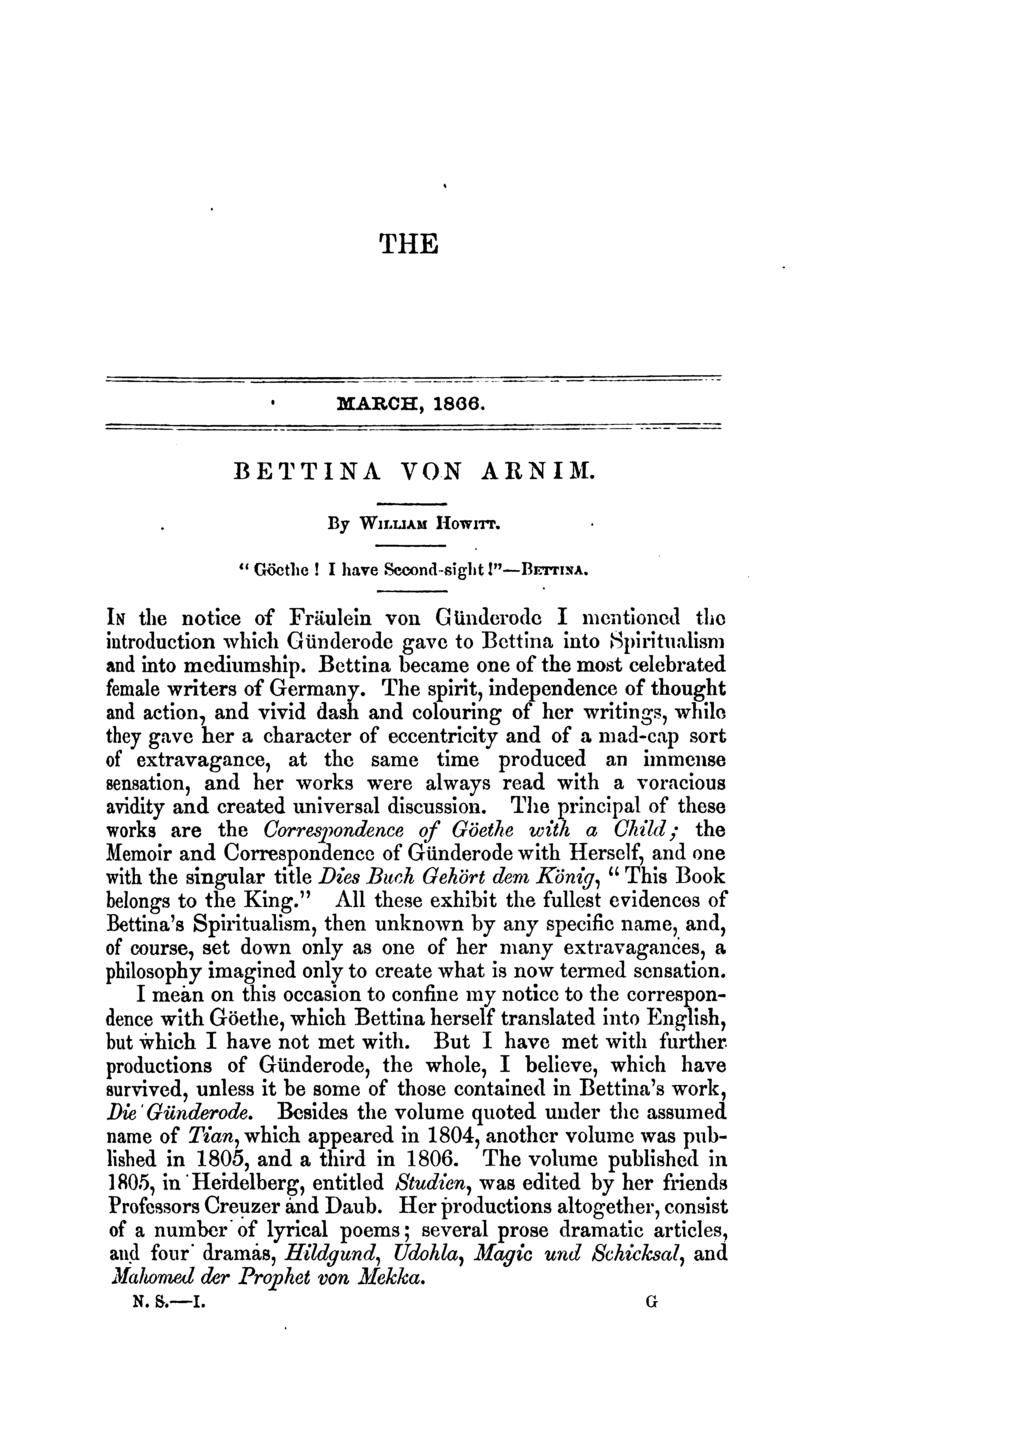 THE SEARCH, 1806. B E T T I N A VON A R N IM. By W illiam H owitt. Goctlie! I have Second-sight I Bettina.